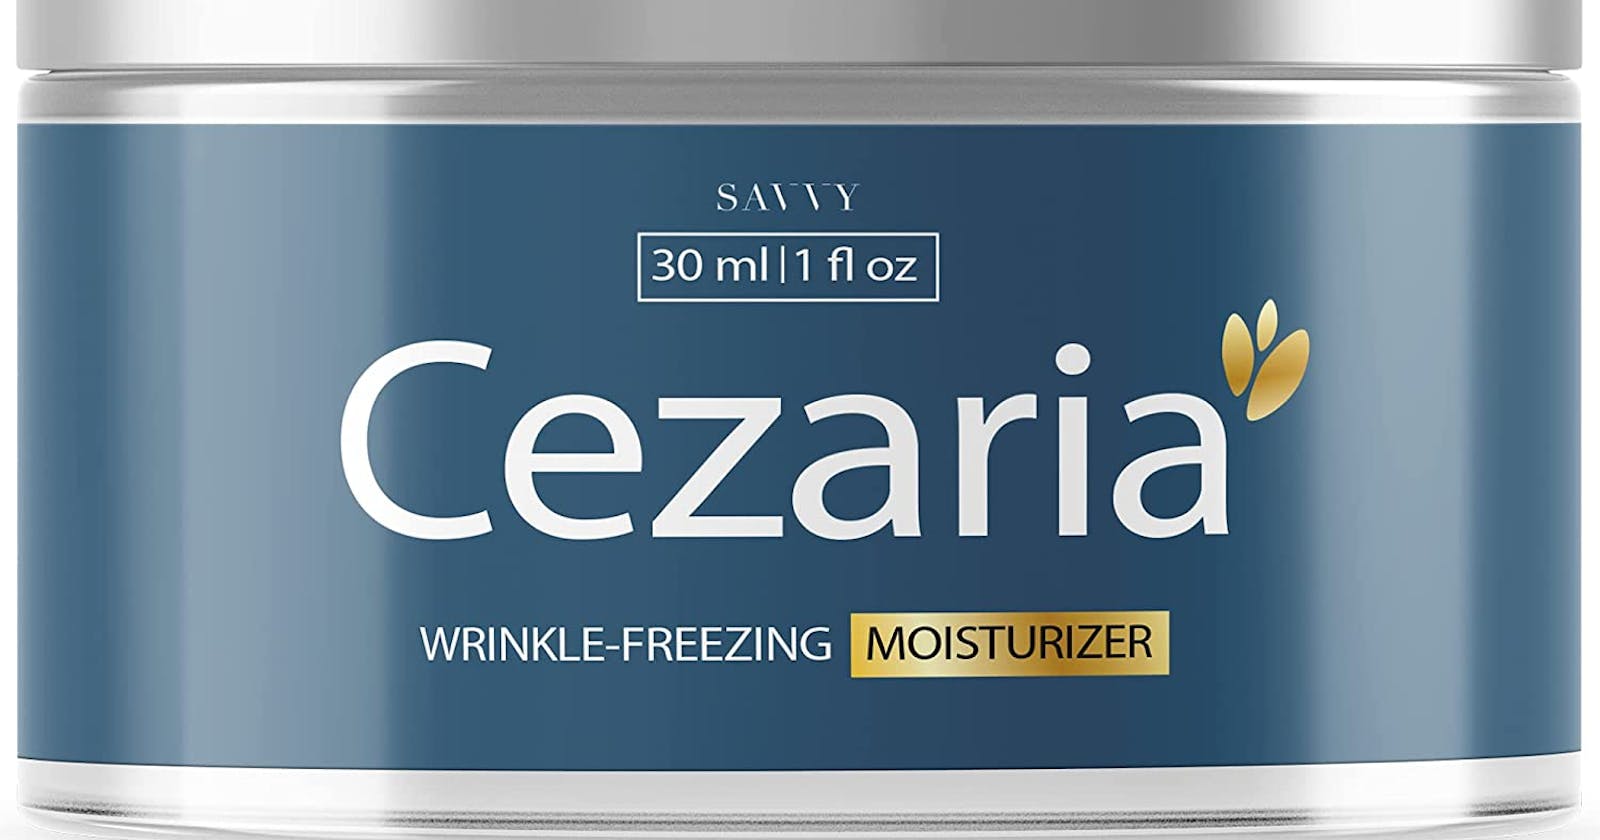 Cezaria Beauty Cream : Are They Worth Using?